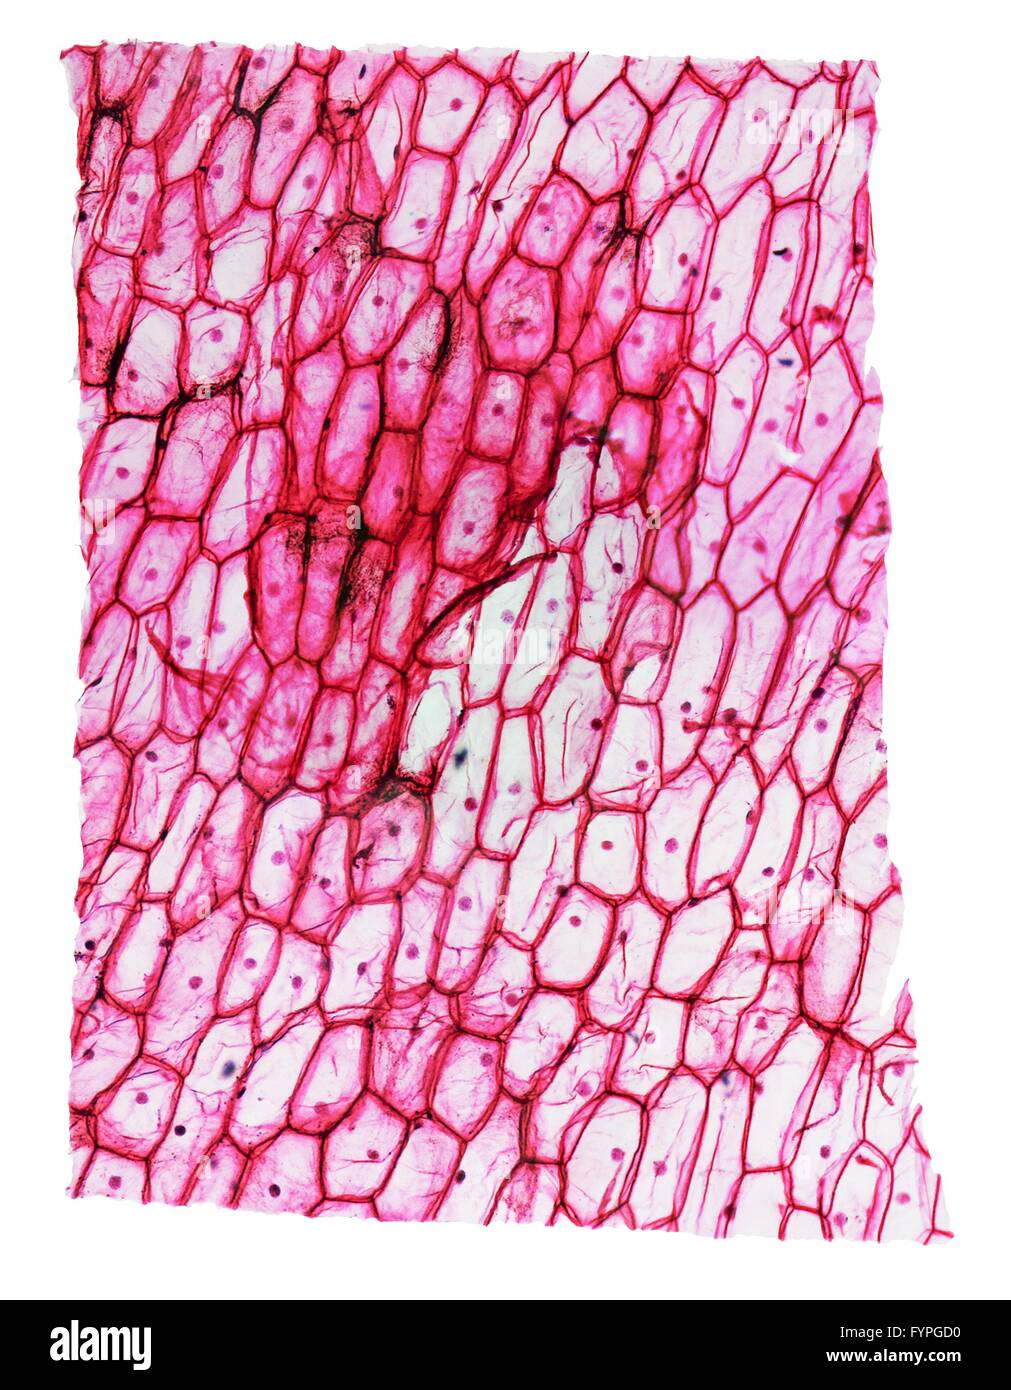 Onion epidermus micrograph Stock Photo